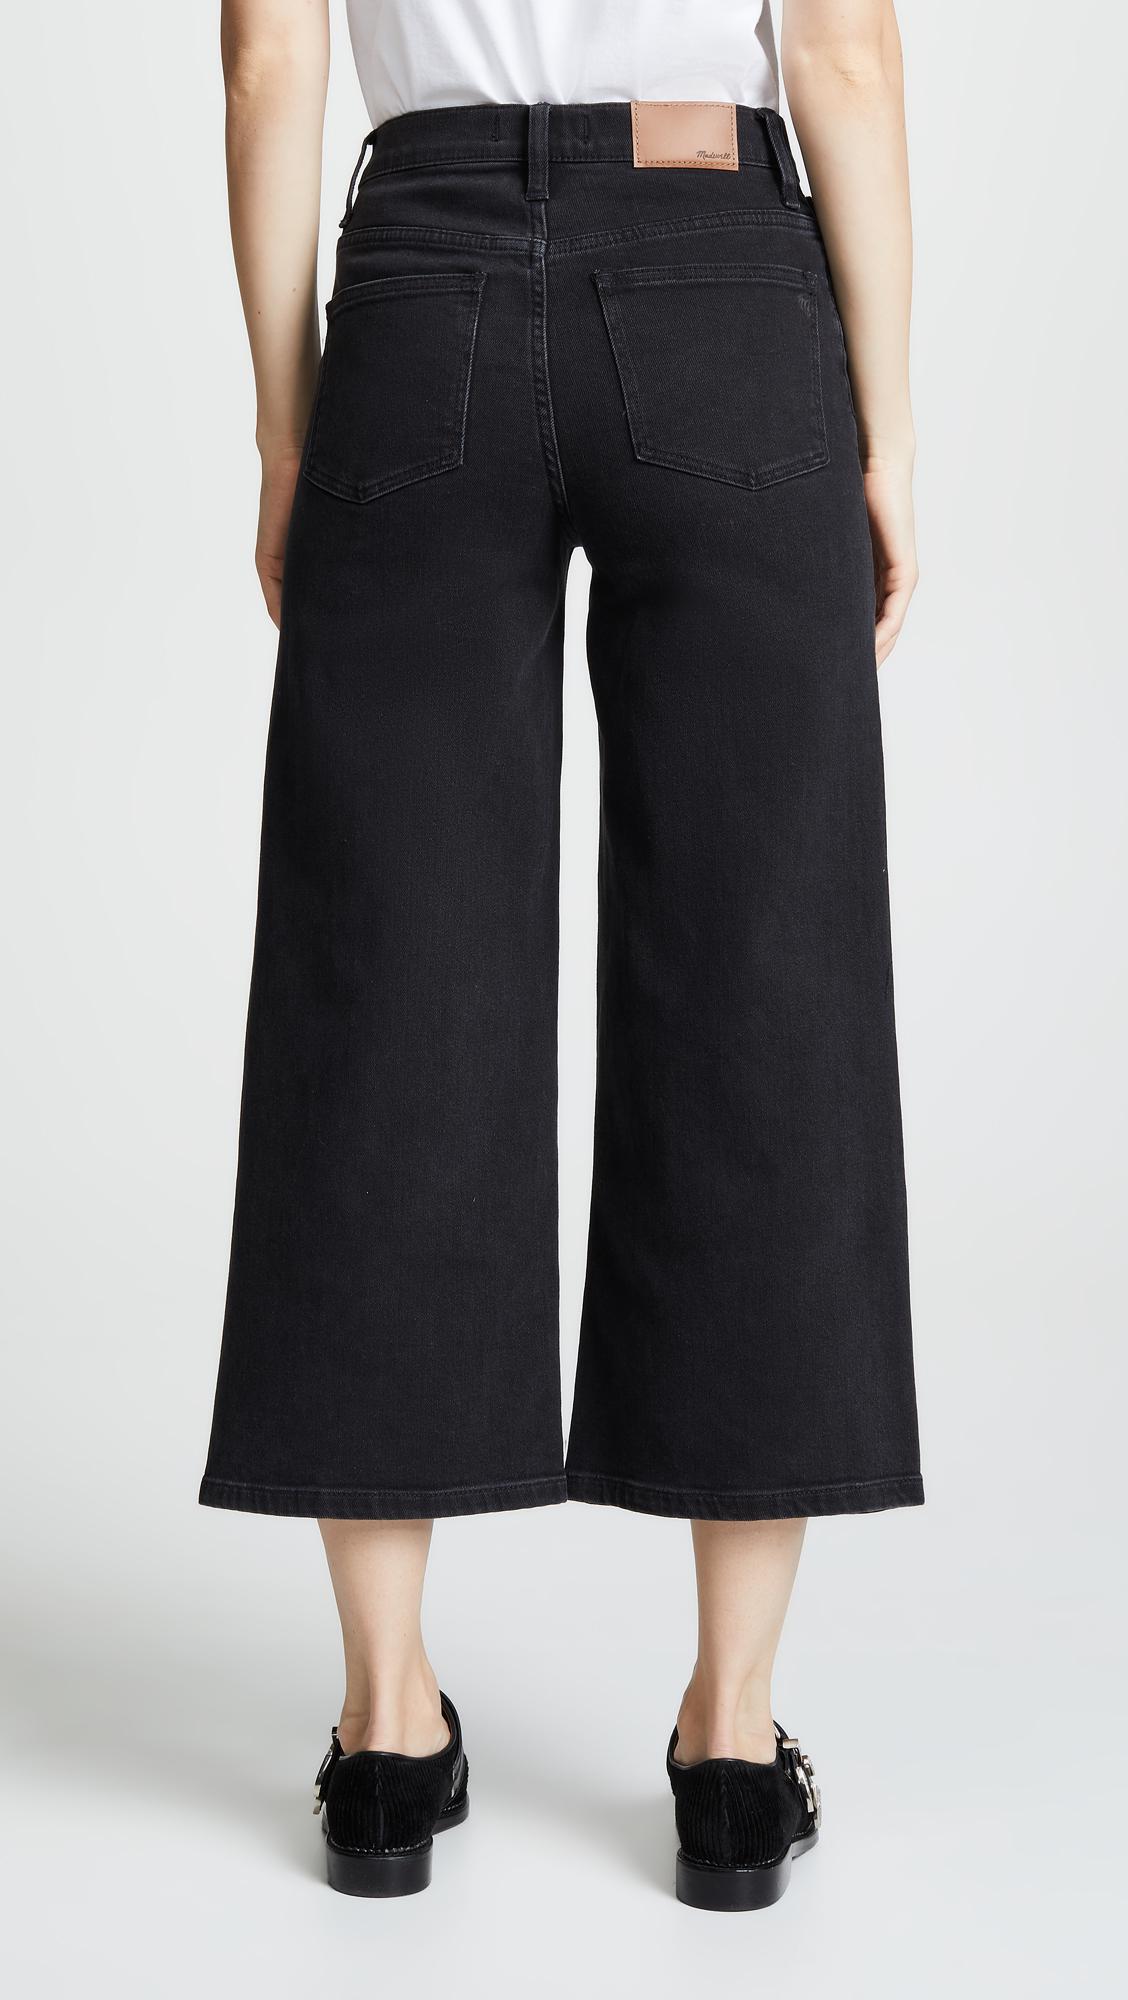 Madewell Denim Wide Leg Crop Jeans in Black - Lyst